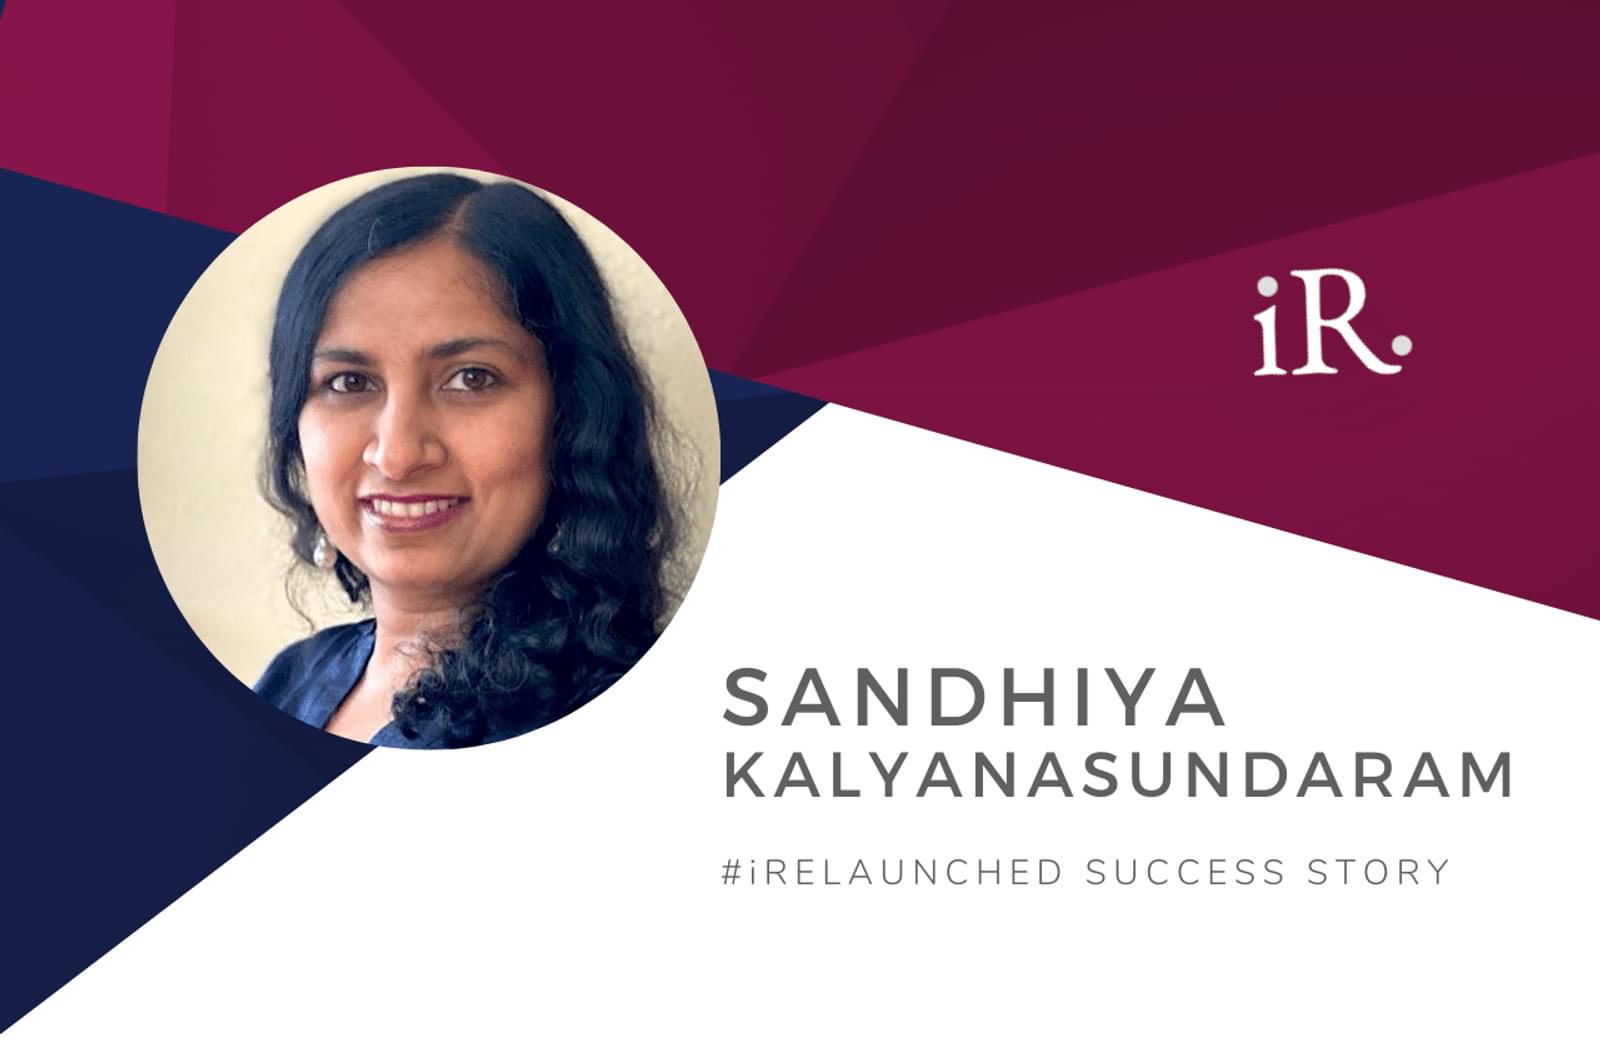 Sandhiya Kalyanasundaram's headshot and the text #iRelaunched Success Story along with the iRelaunch logo.  A navy and maroon geometric textured background intersect behind Sandhiya's headshot.